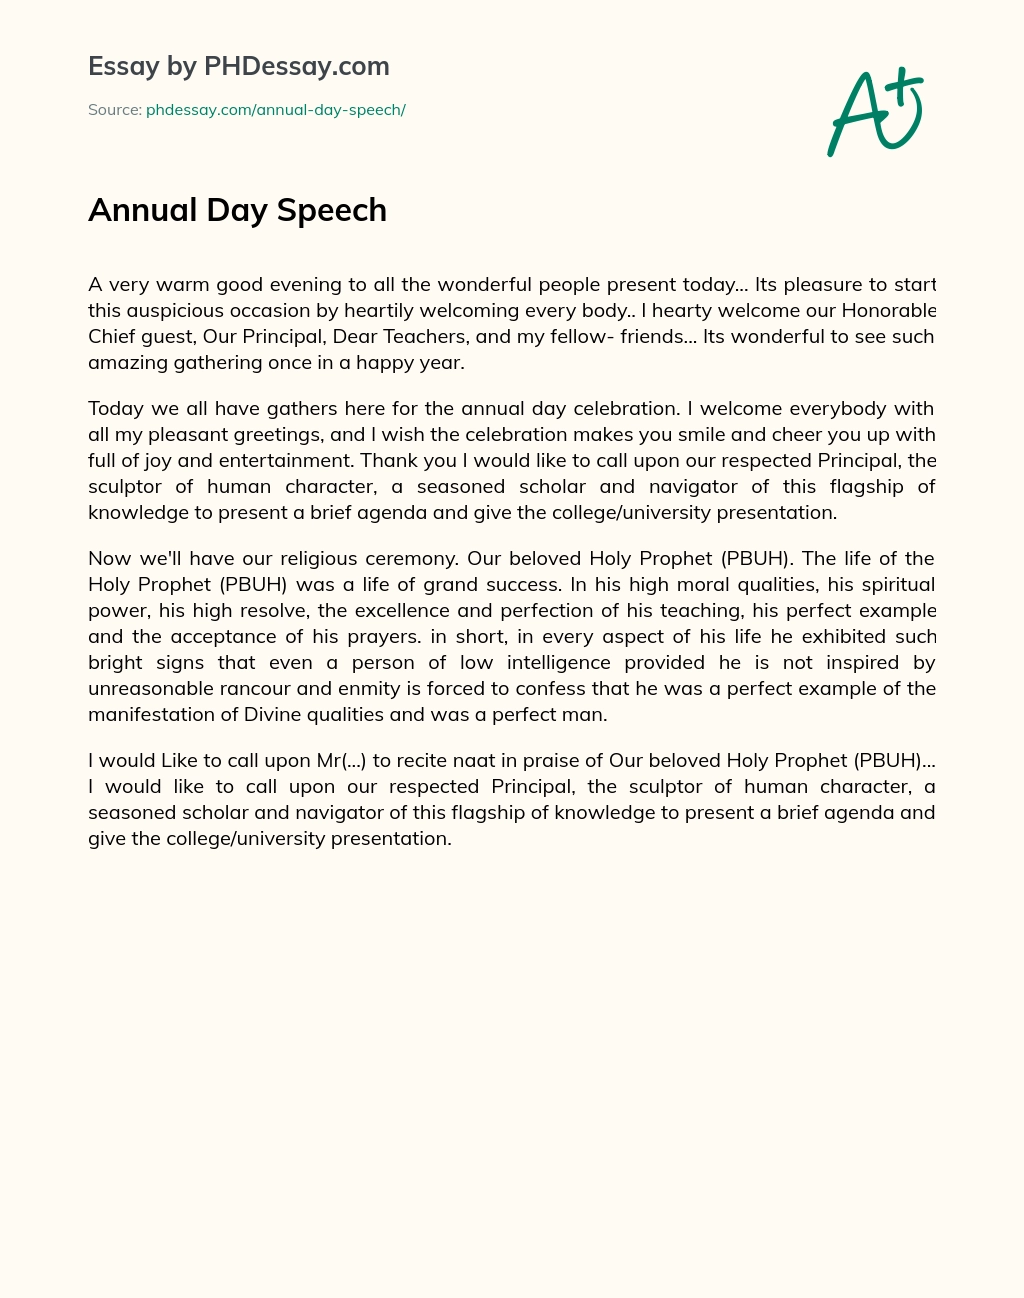 Annual Day Speech essay